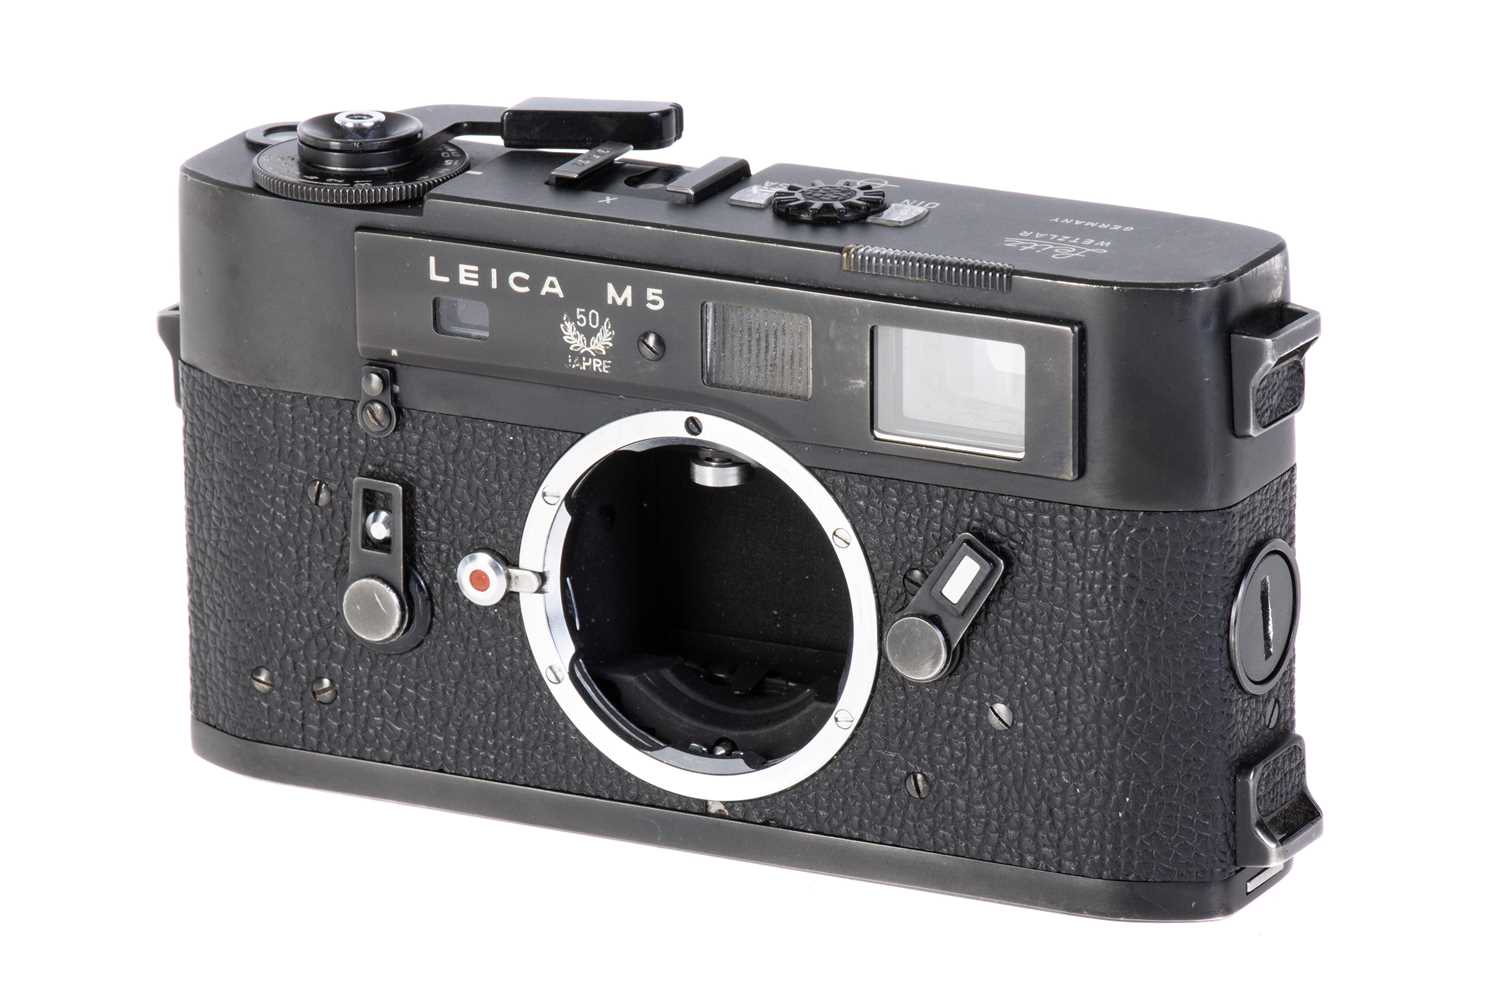 LEICA M5 50 JAHRE - フィルムカメラ